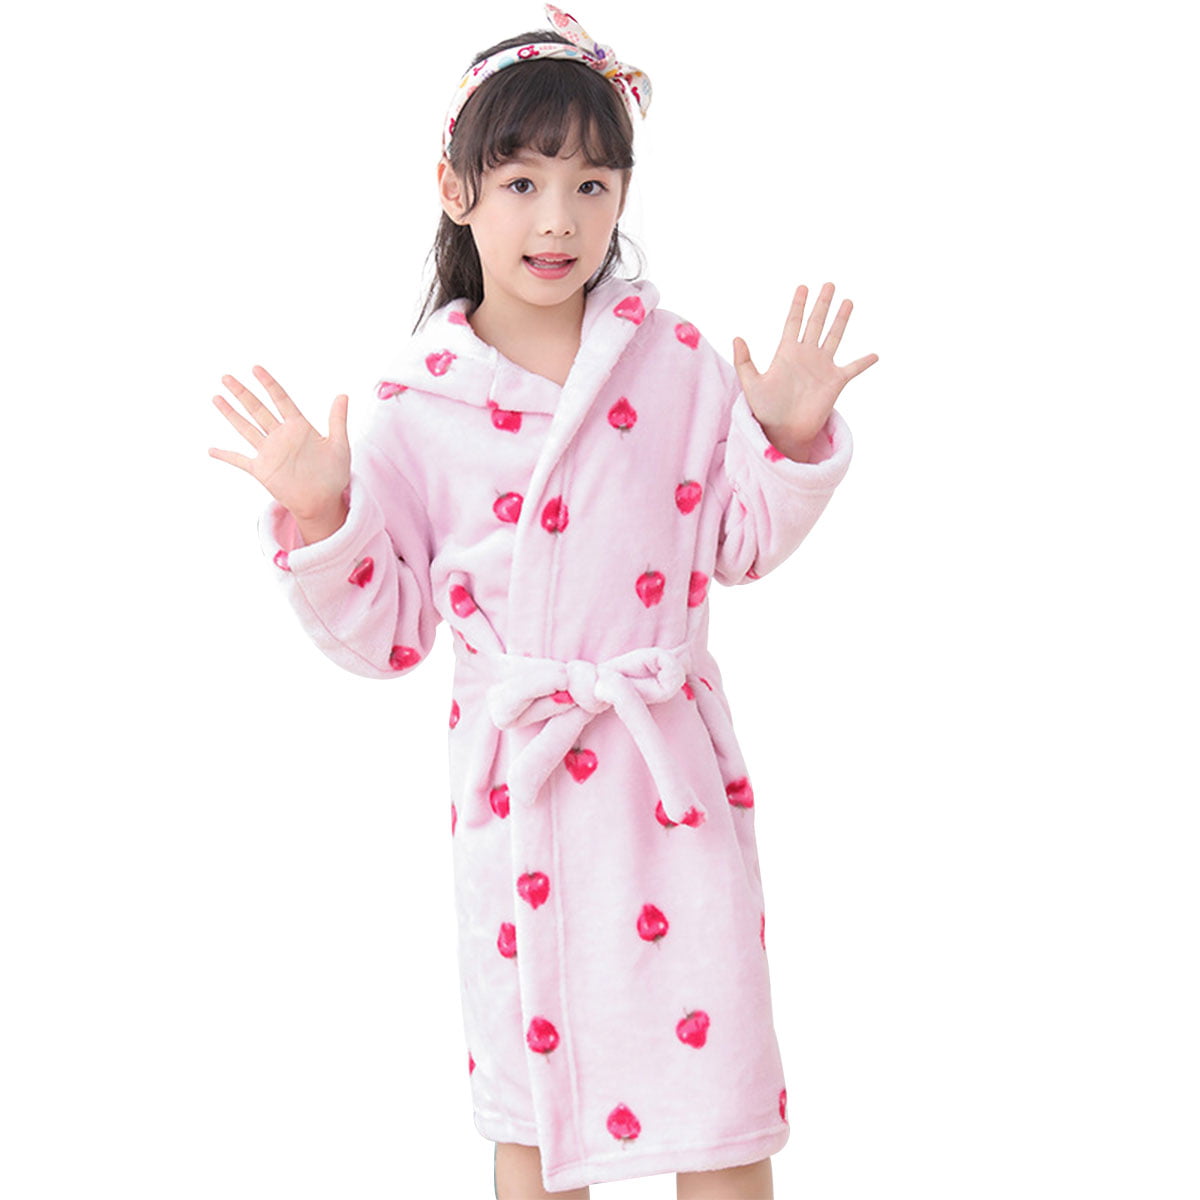 Flannel Bathrobe Pajamas for Girls and Boys Clearance Pink, 3-5 Years Shower Spa Bath Sleepwear Home Wear Pockets Kids Bathrobes